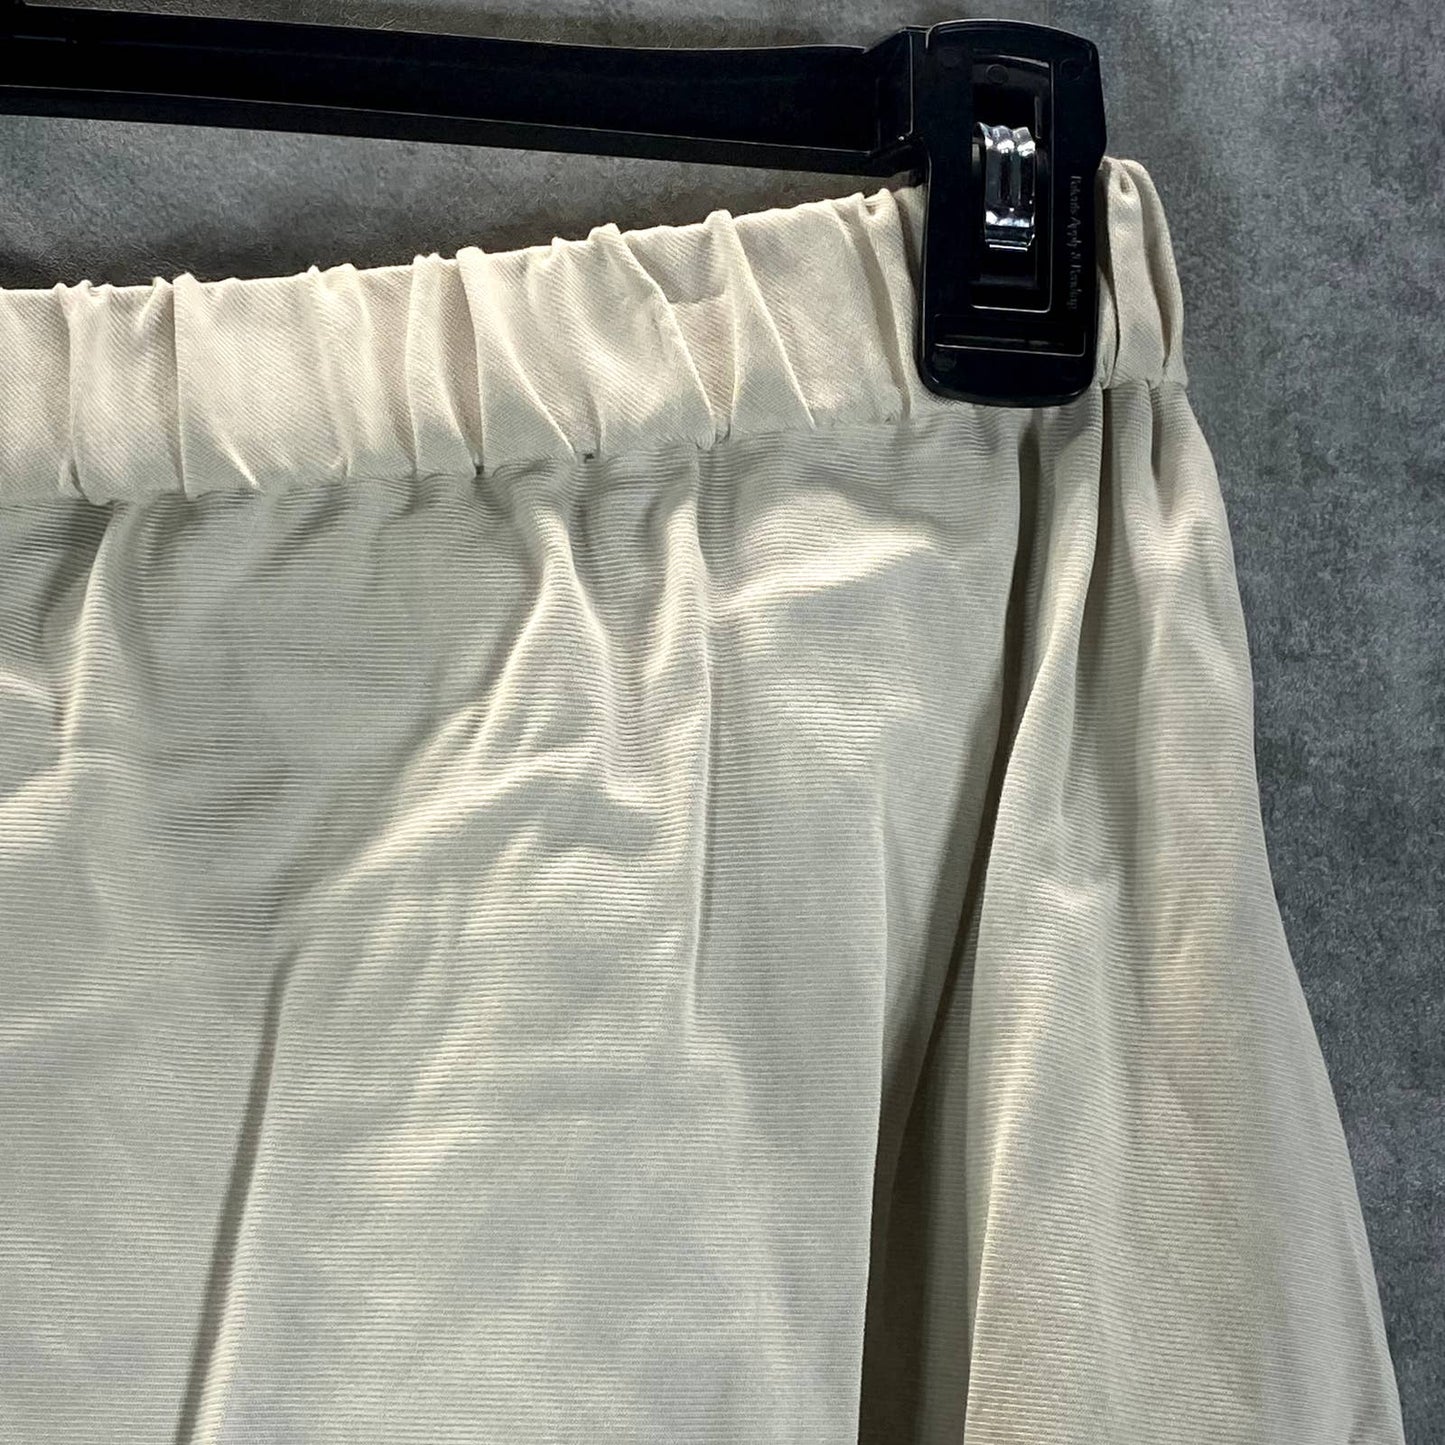 ALFANI Women's Oatmeal Elastic Waist Pocketed Pull-On Midi Skirt SZ 10